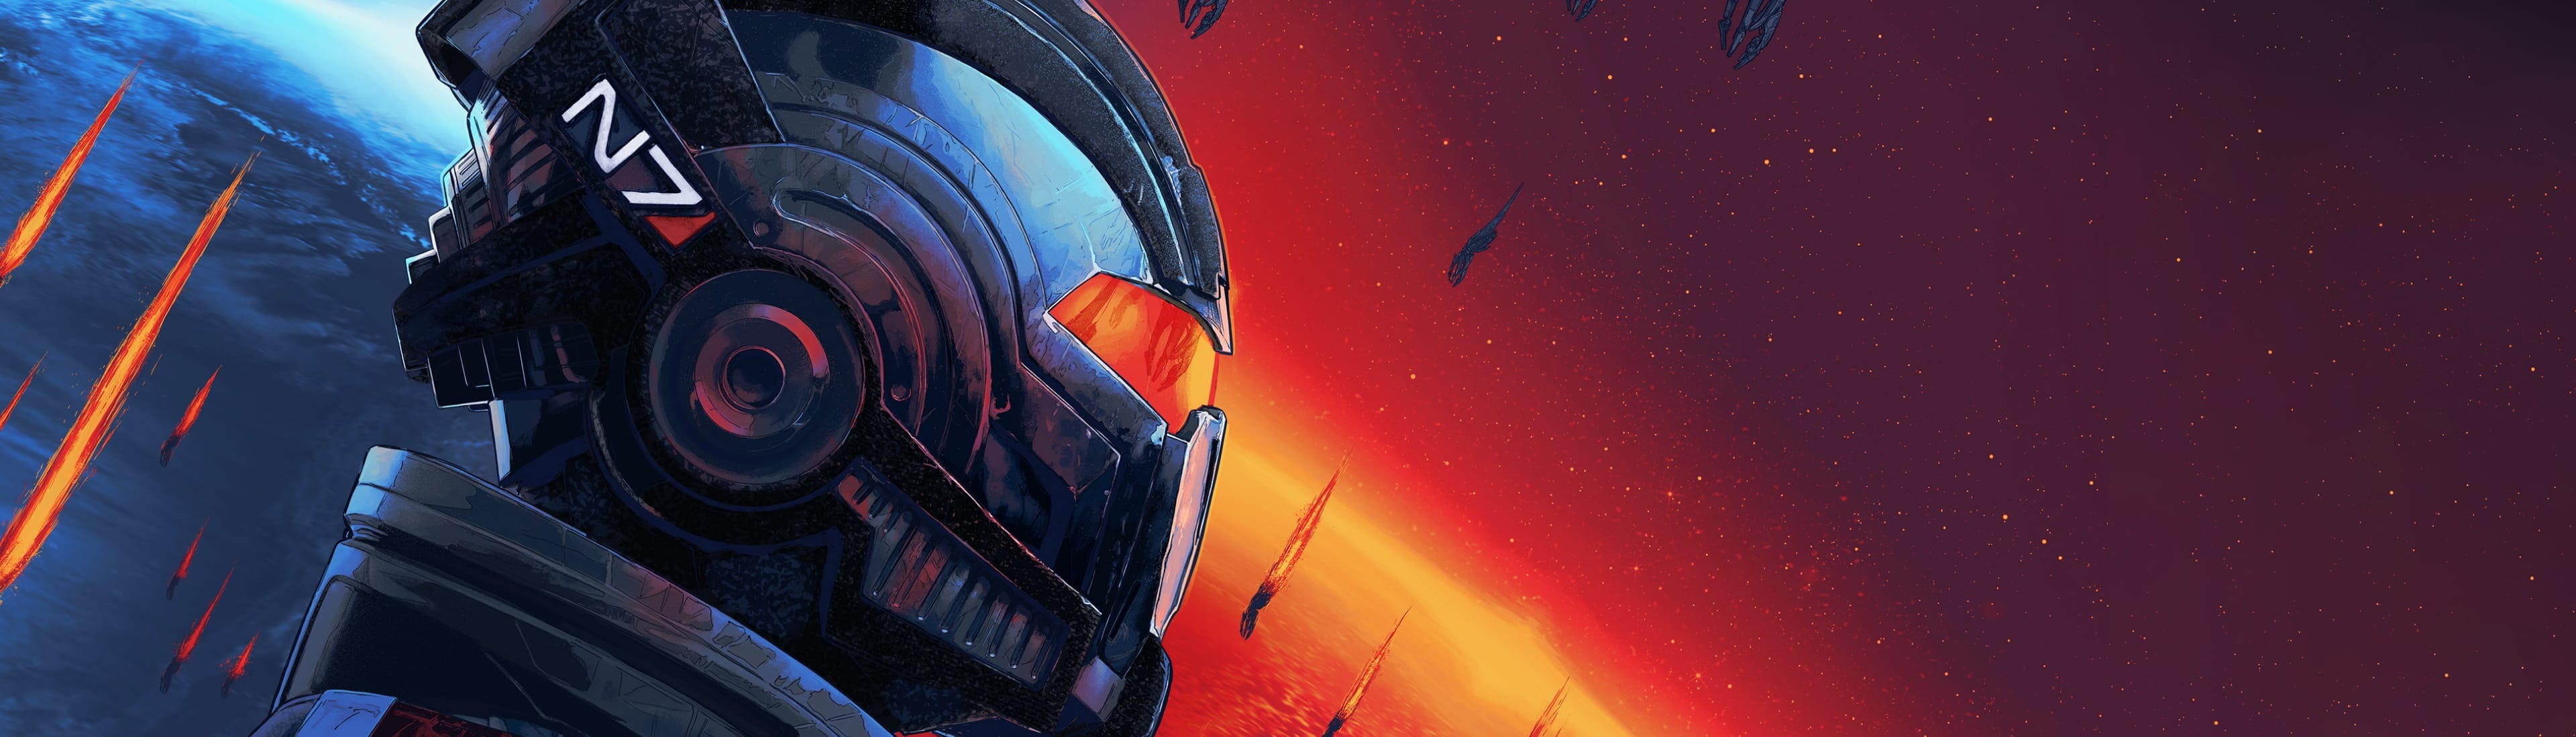 Mass Effect 3, Legendary edition, Enhanced gaming experience, Iconic sci-fi franchise, 3840x1100 Dual Screen Desktop